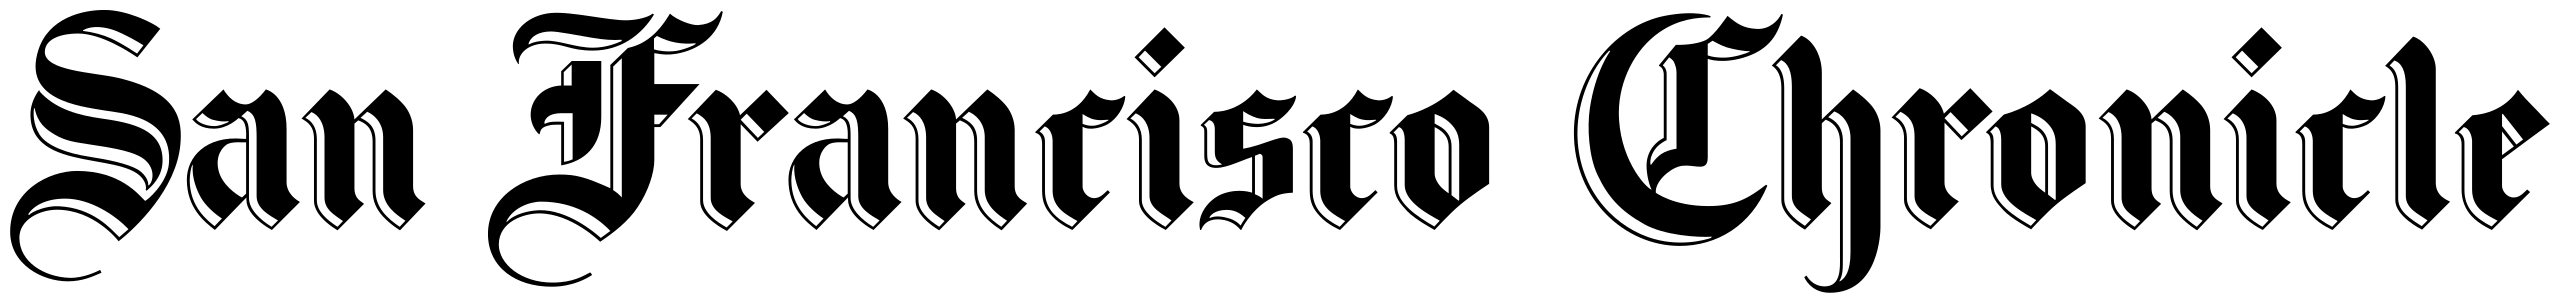 File:San Francisco Chronicle logo.svg - Wikipedia